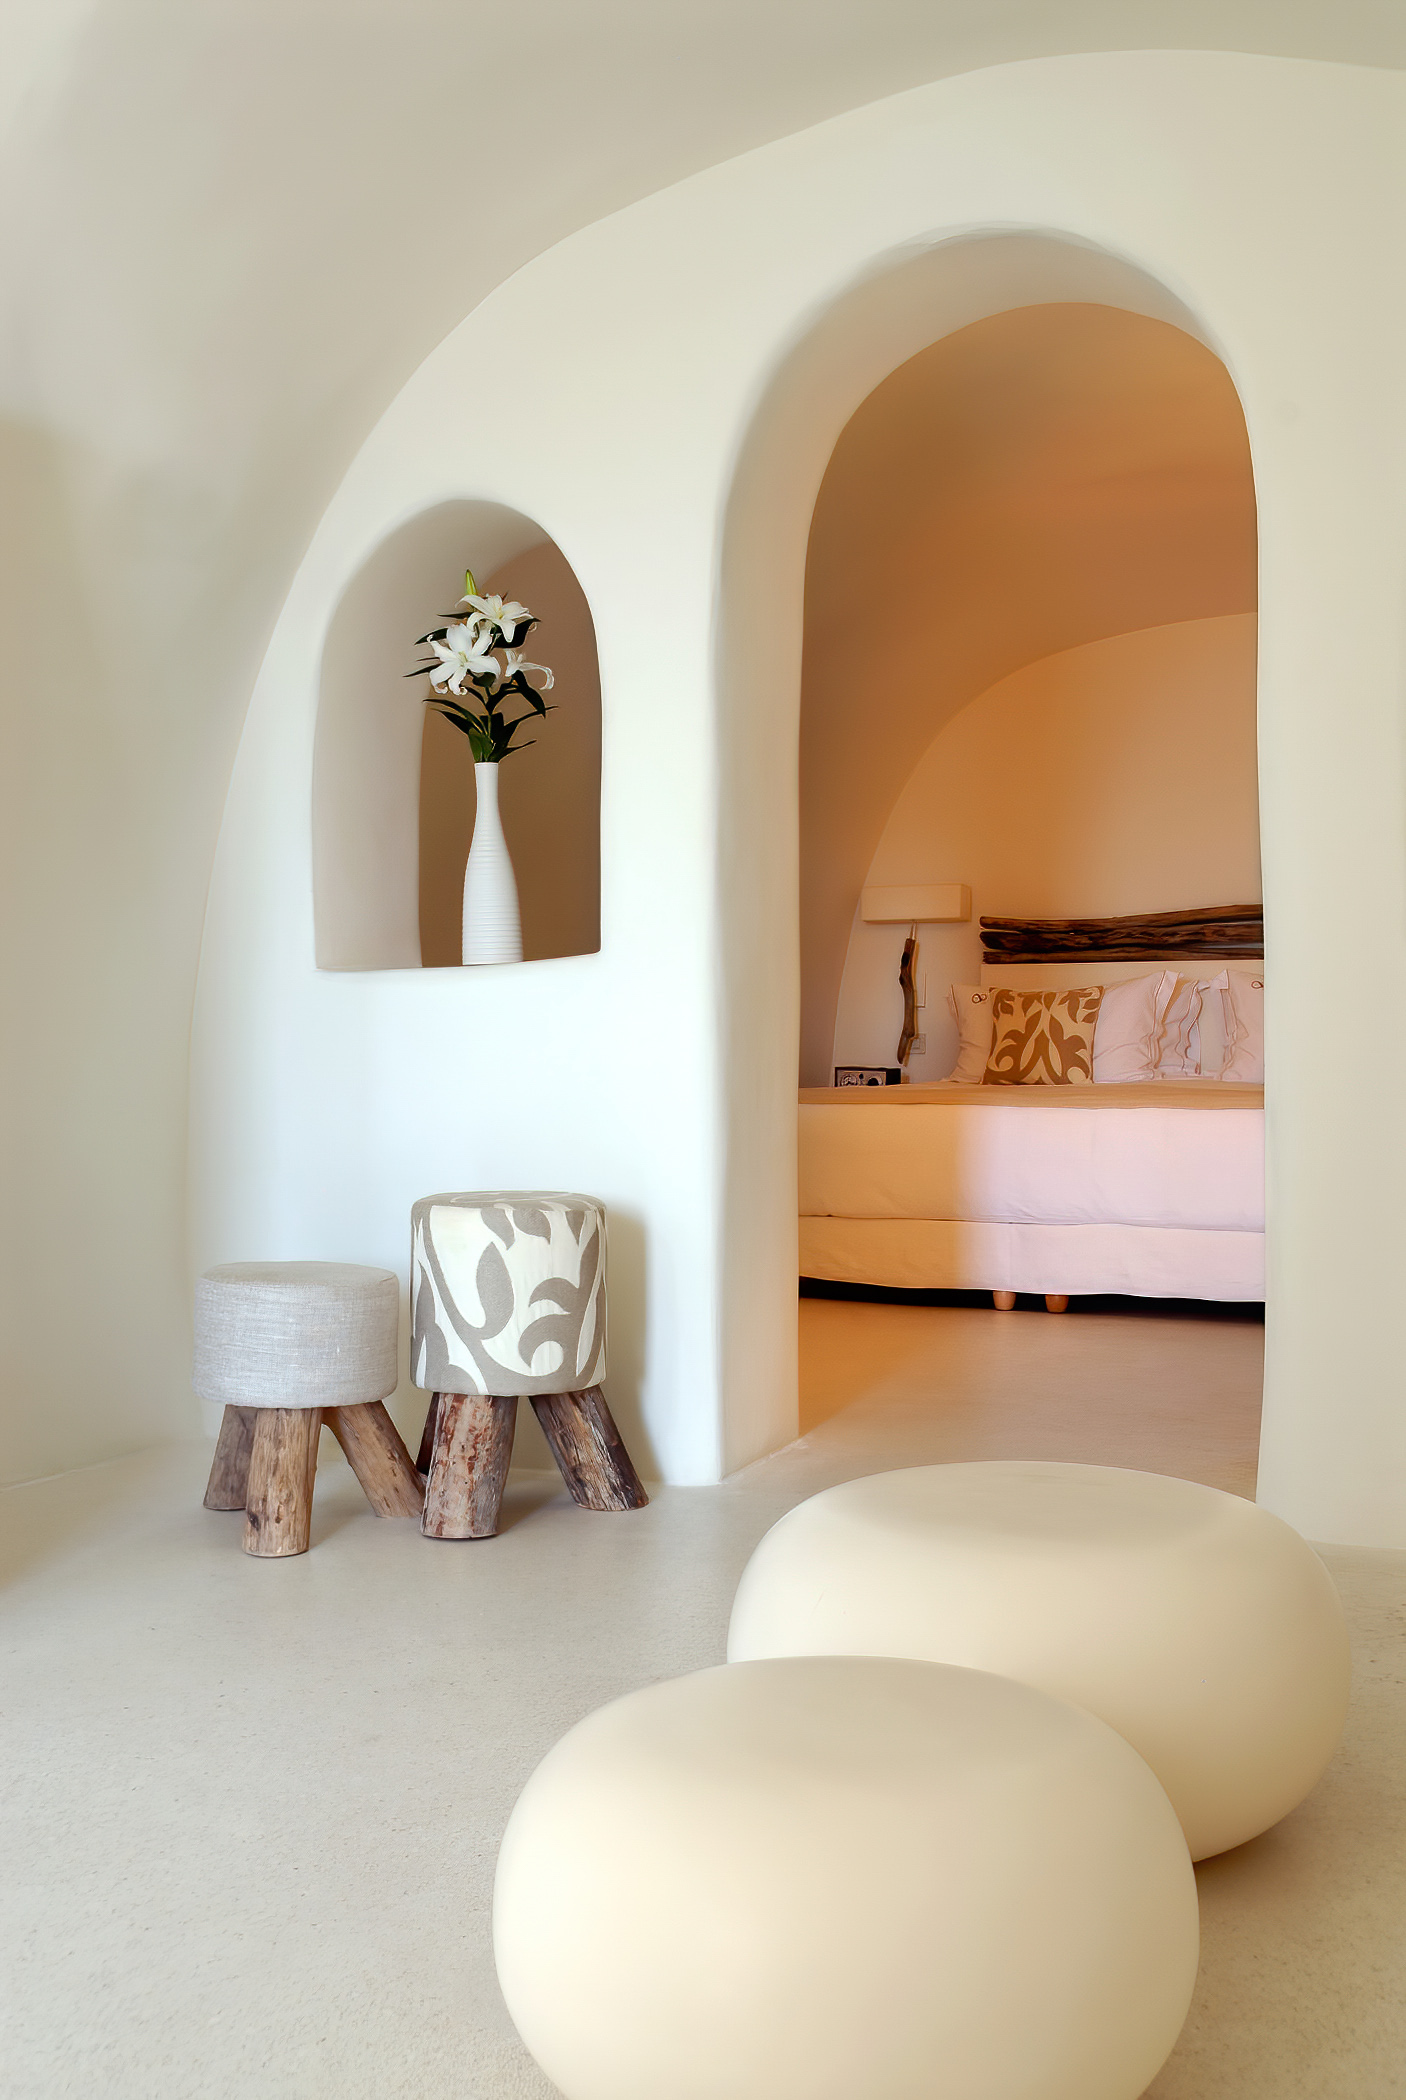 Mystique Hotel Santorini – Oia, Santorini Island, Greece – Bedroom Decor